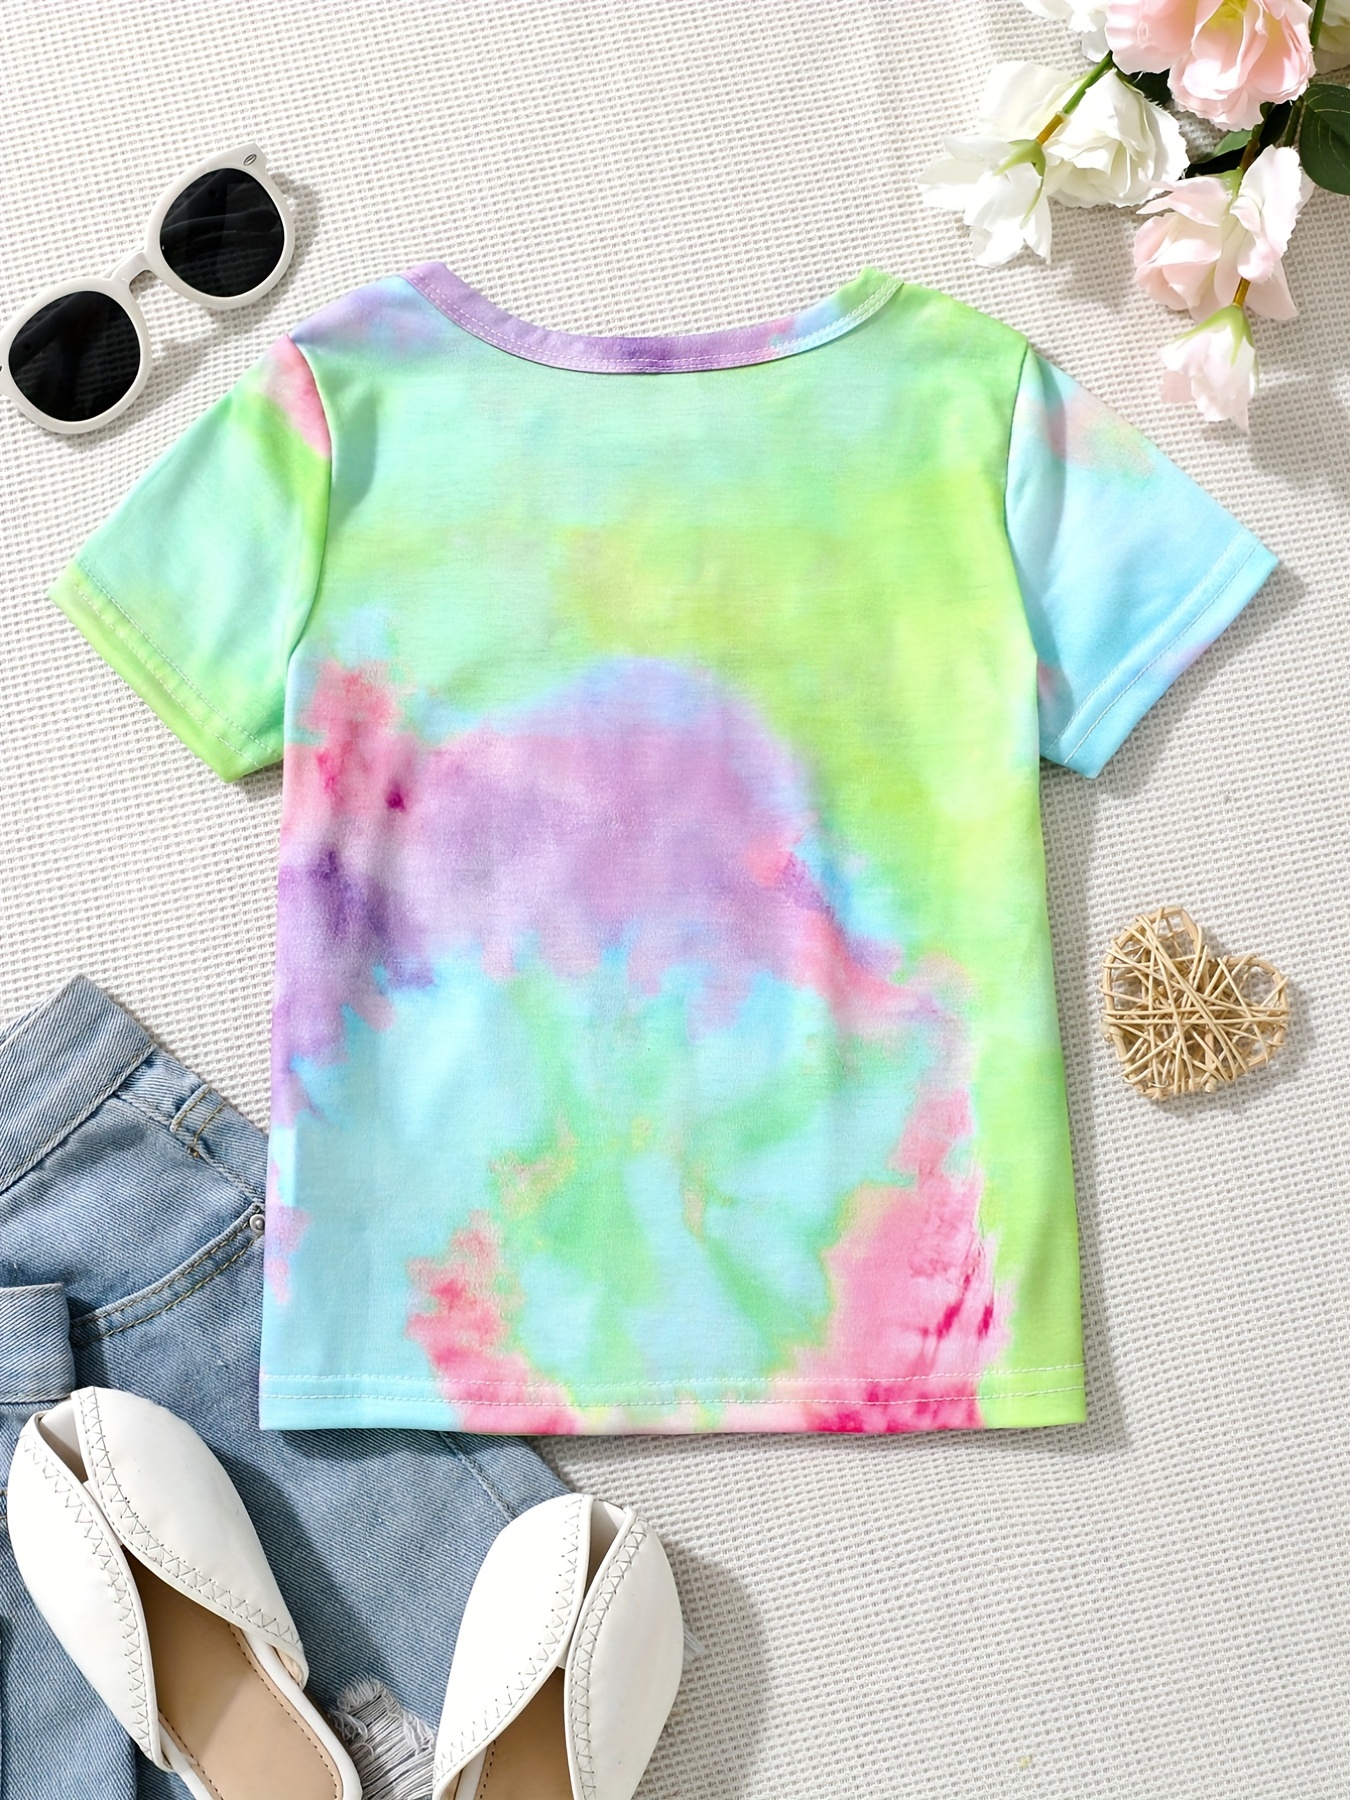 VerPetridure Clearance Toddler Baby Girl Summer Tie-dye T-Shirt